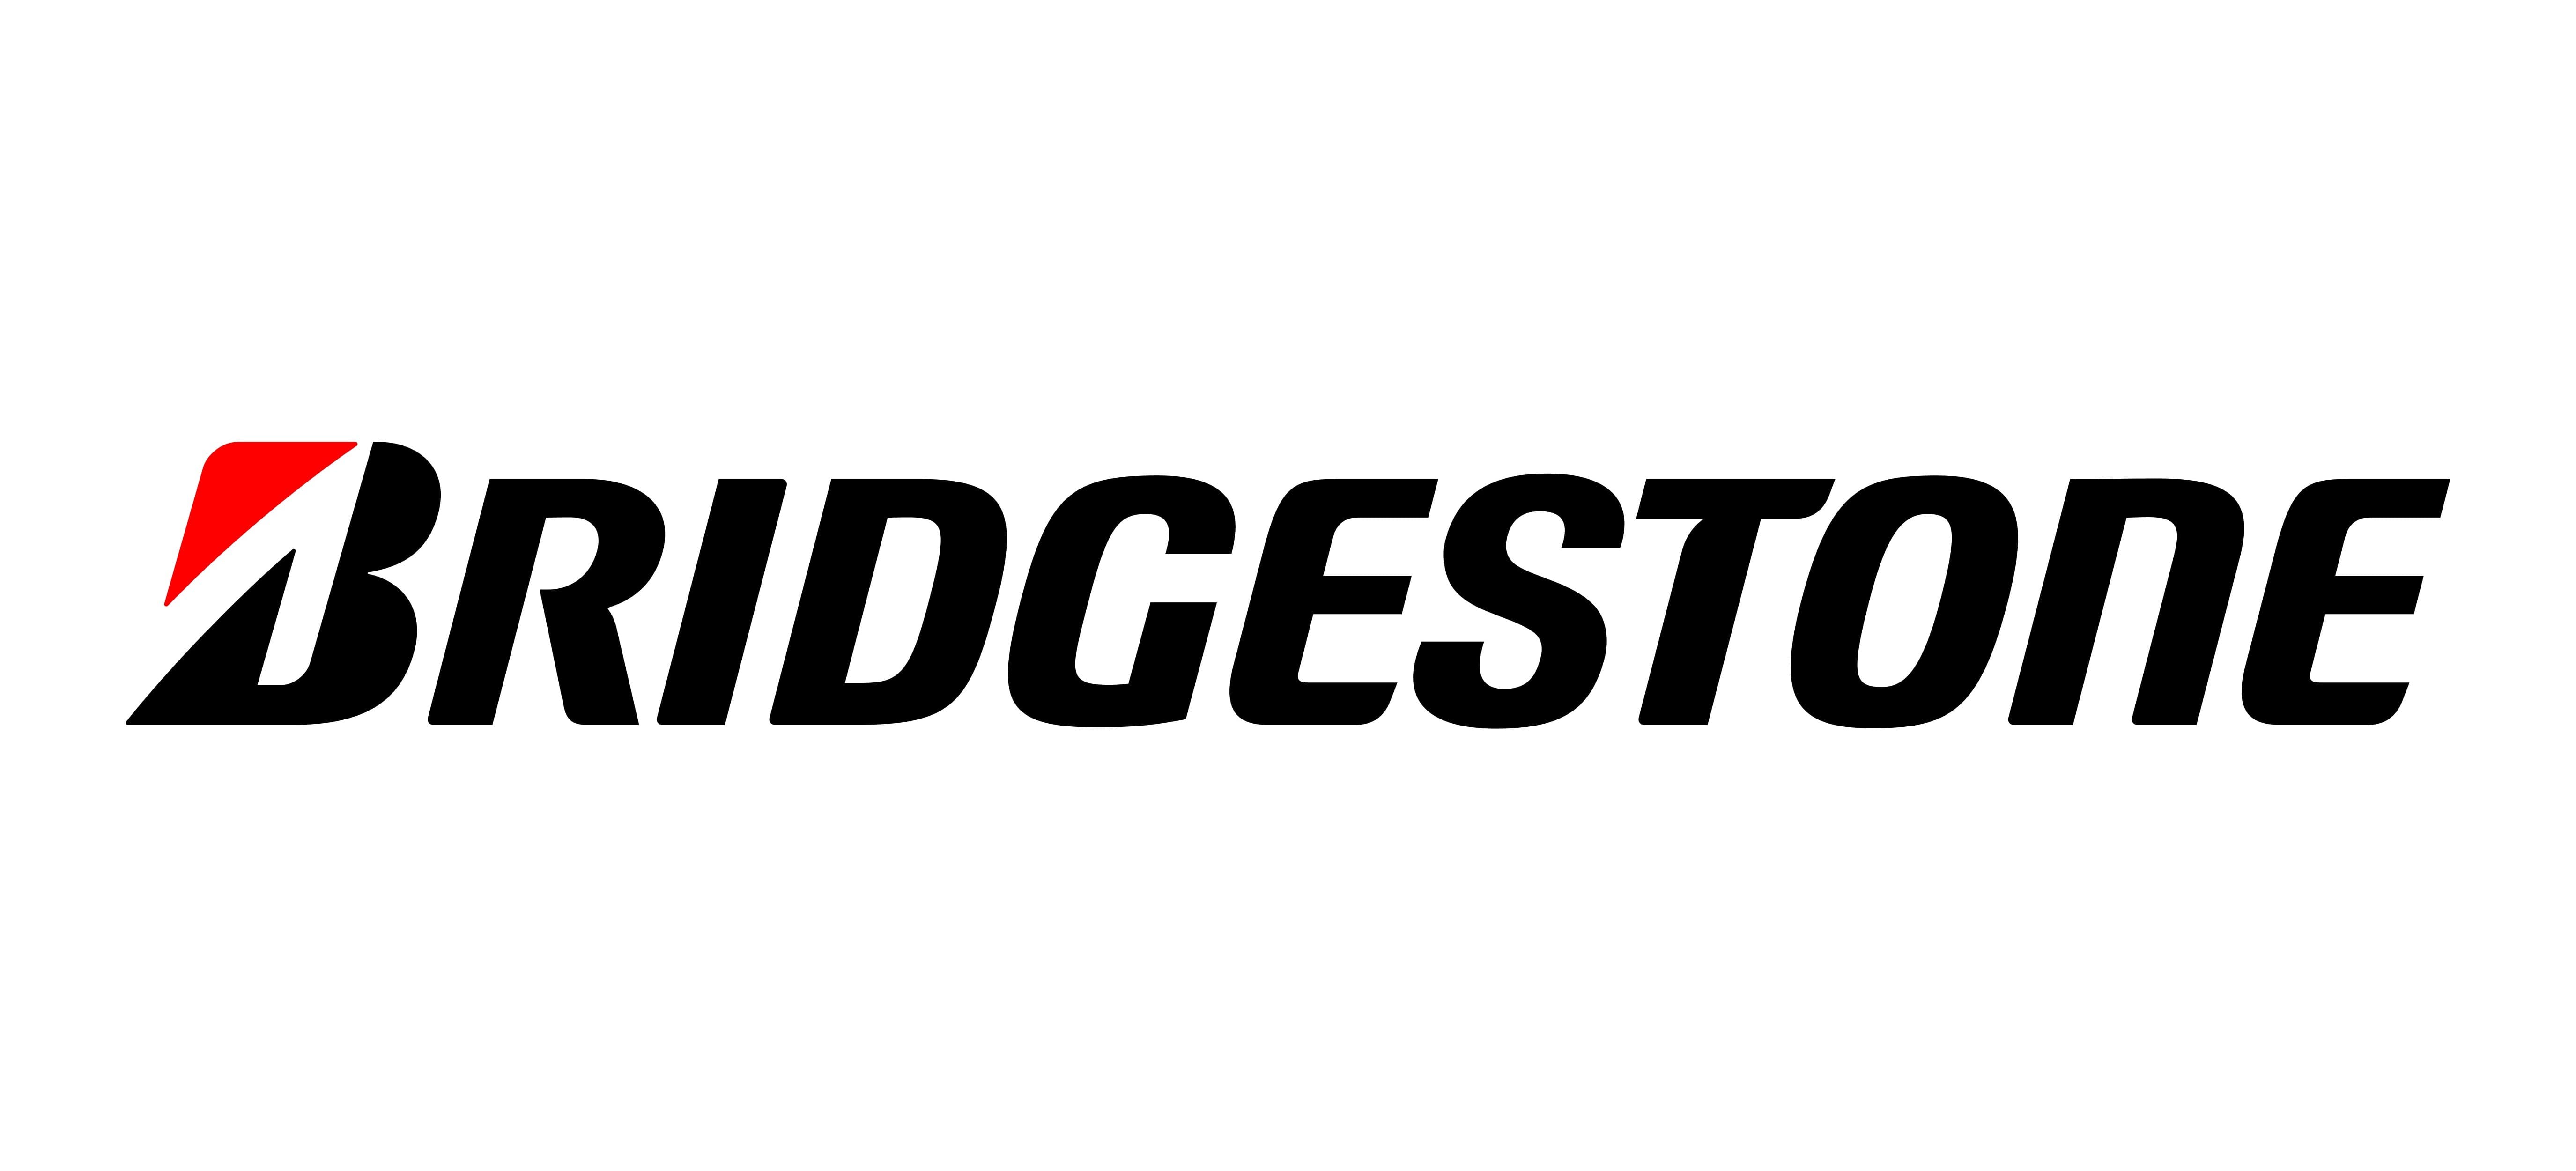 Bridgestone Hispania Manufacturing